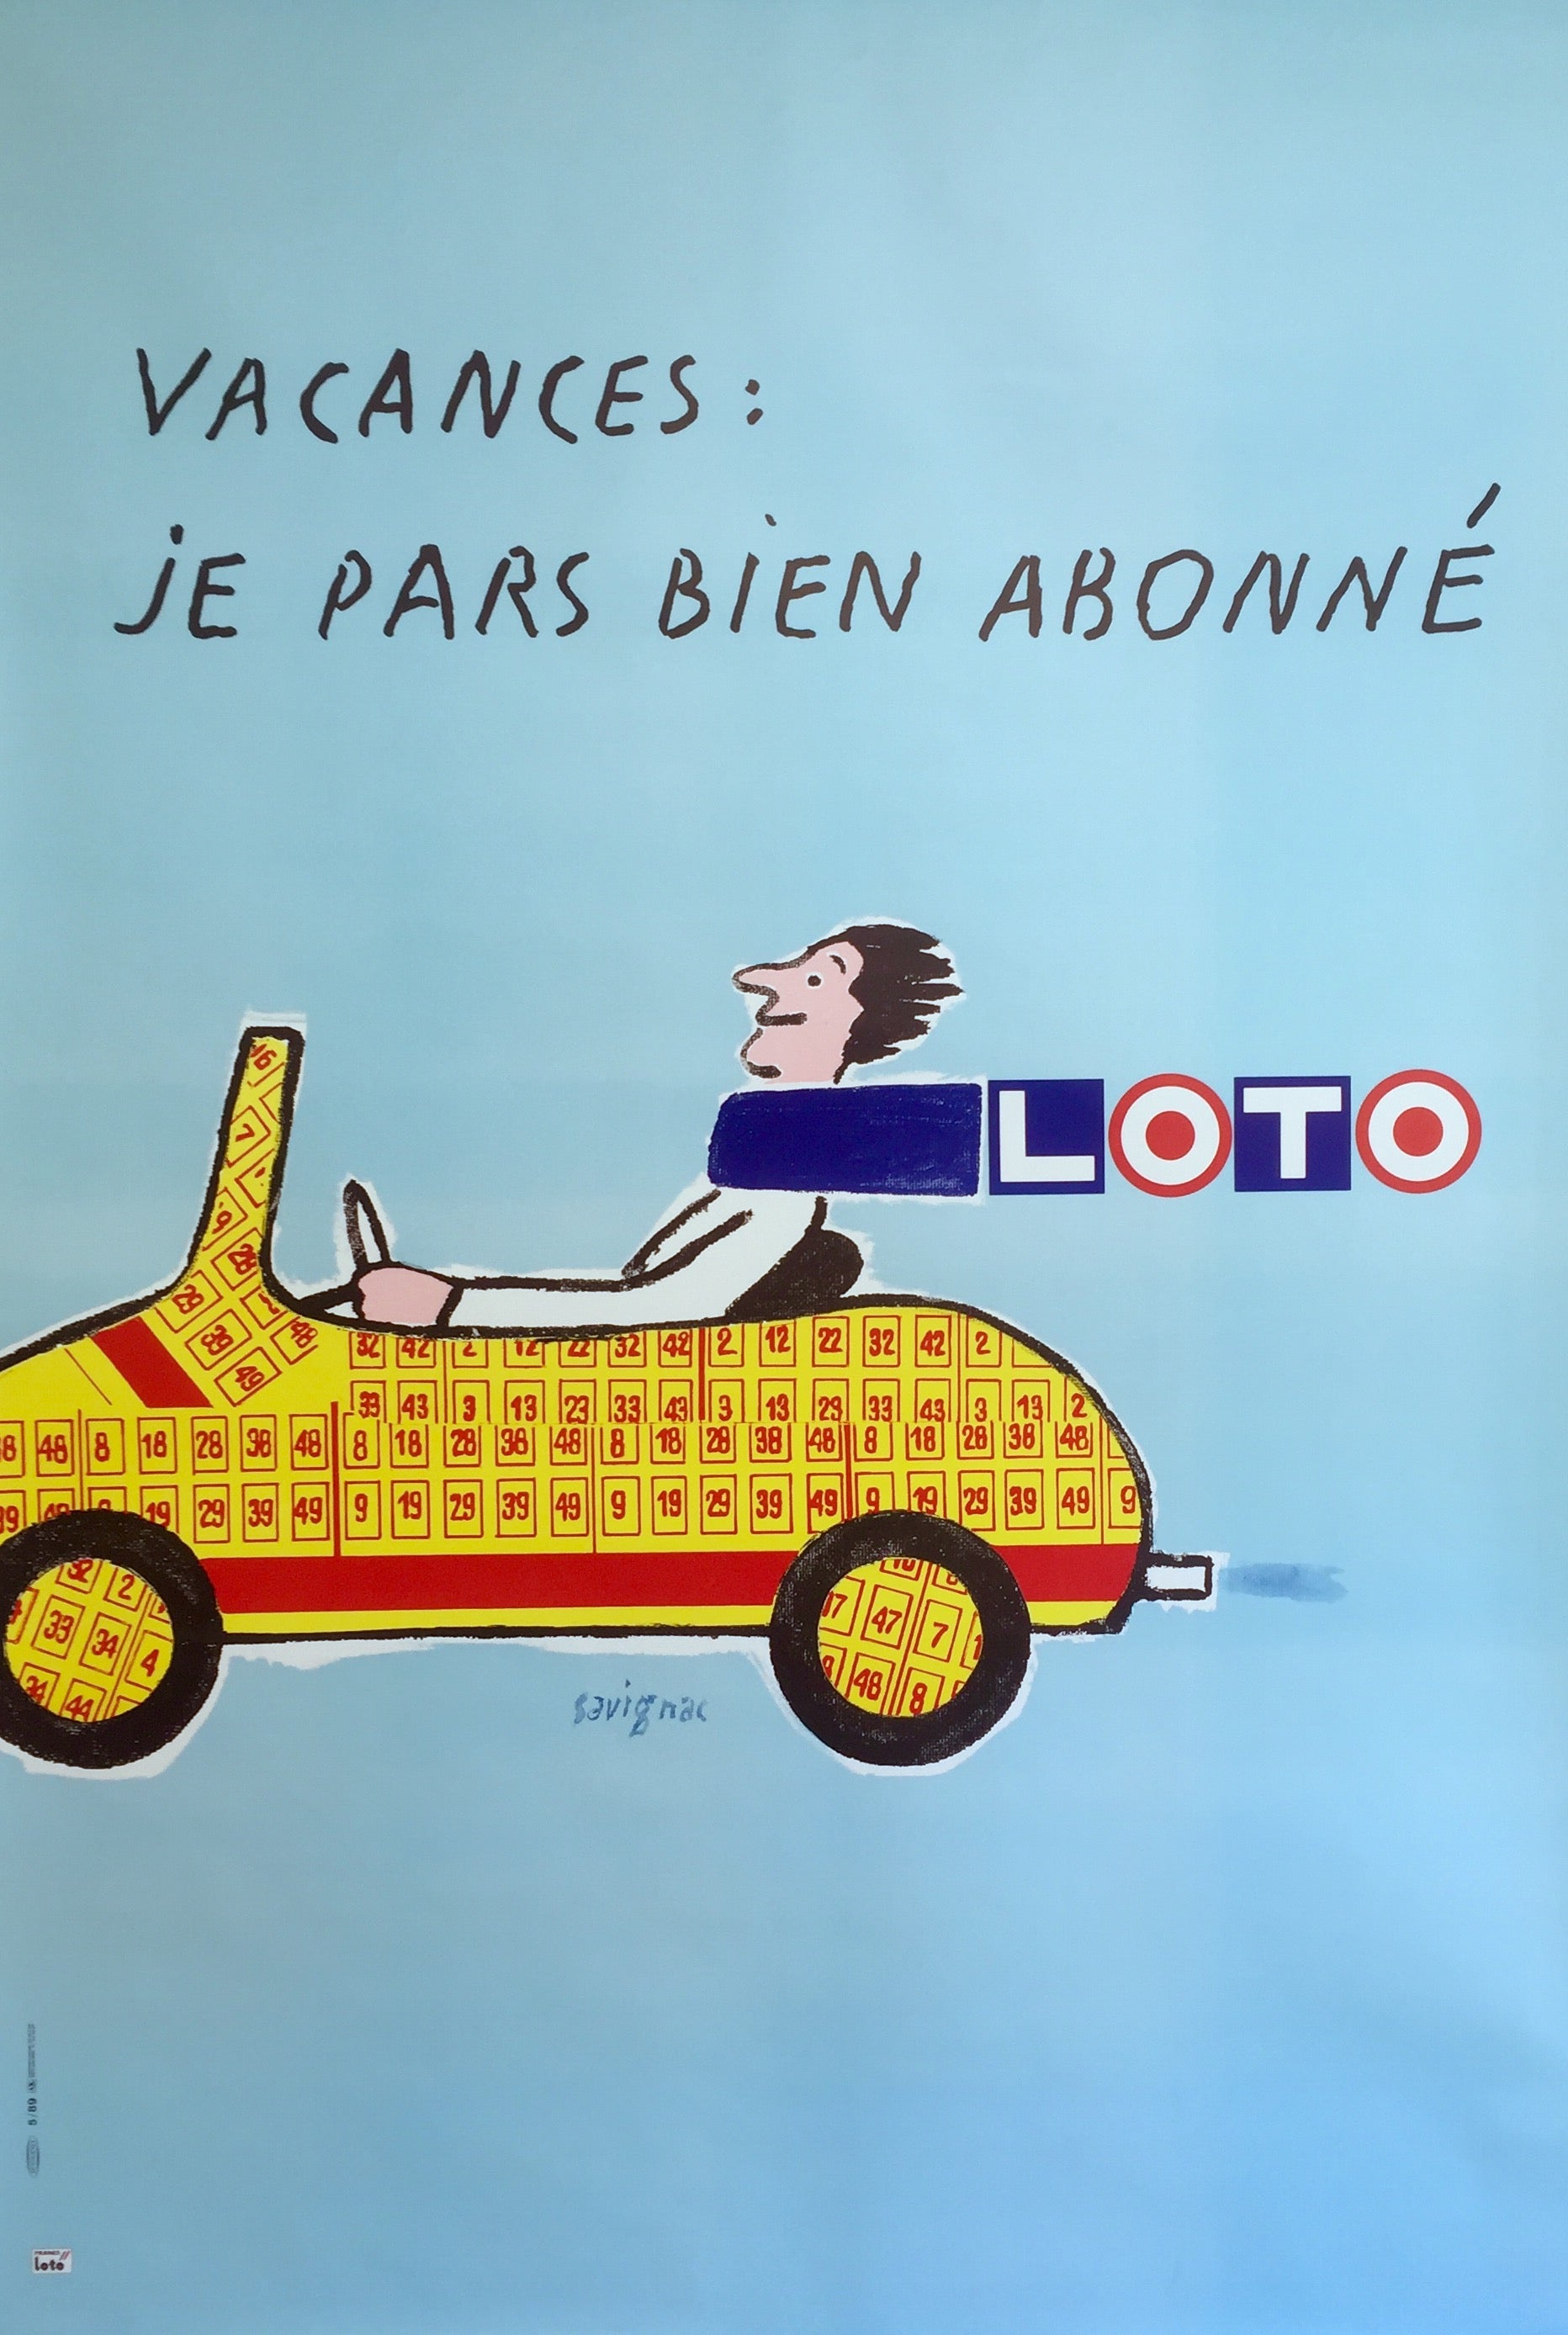 Loto Original Poster